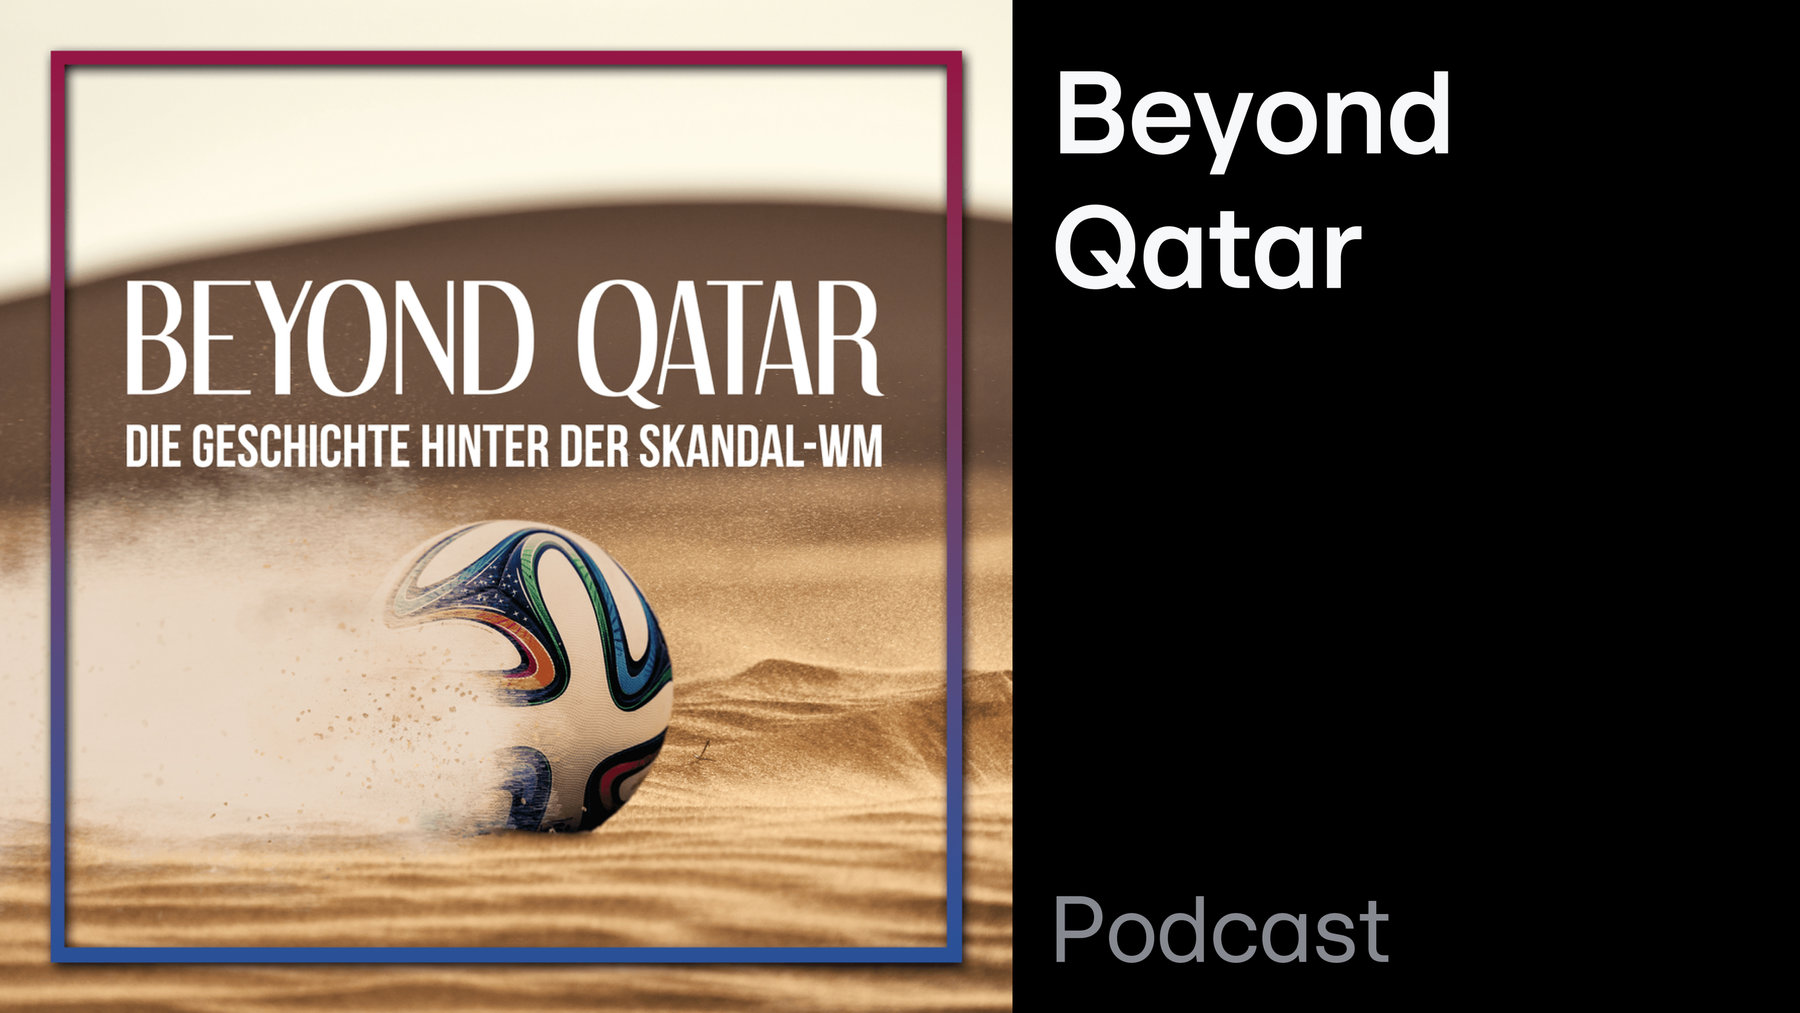 Beyond Qatar